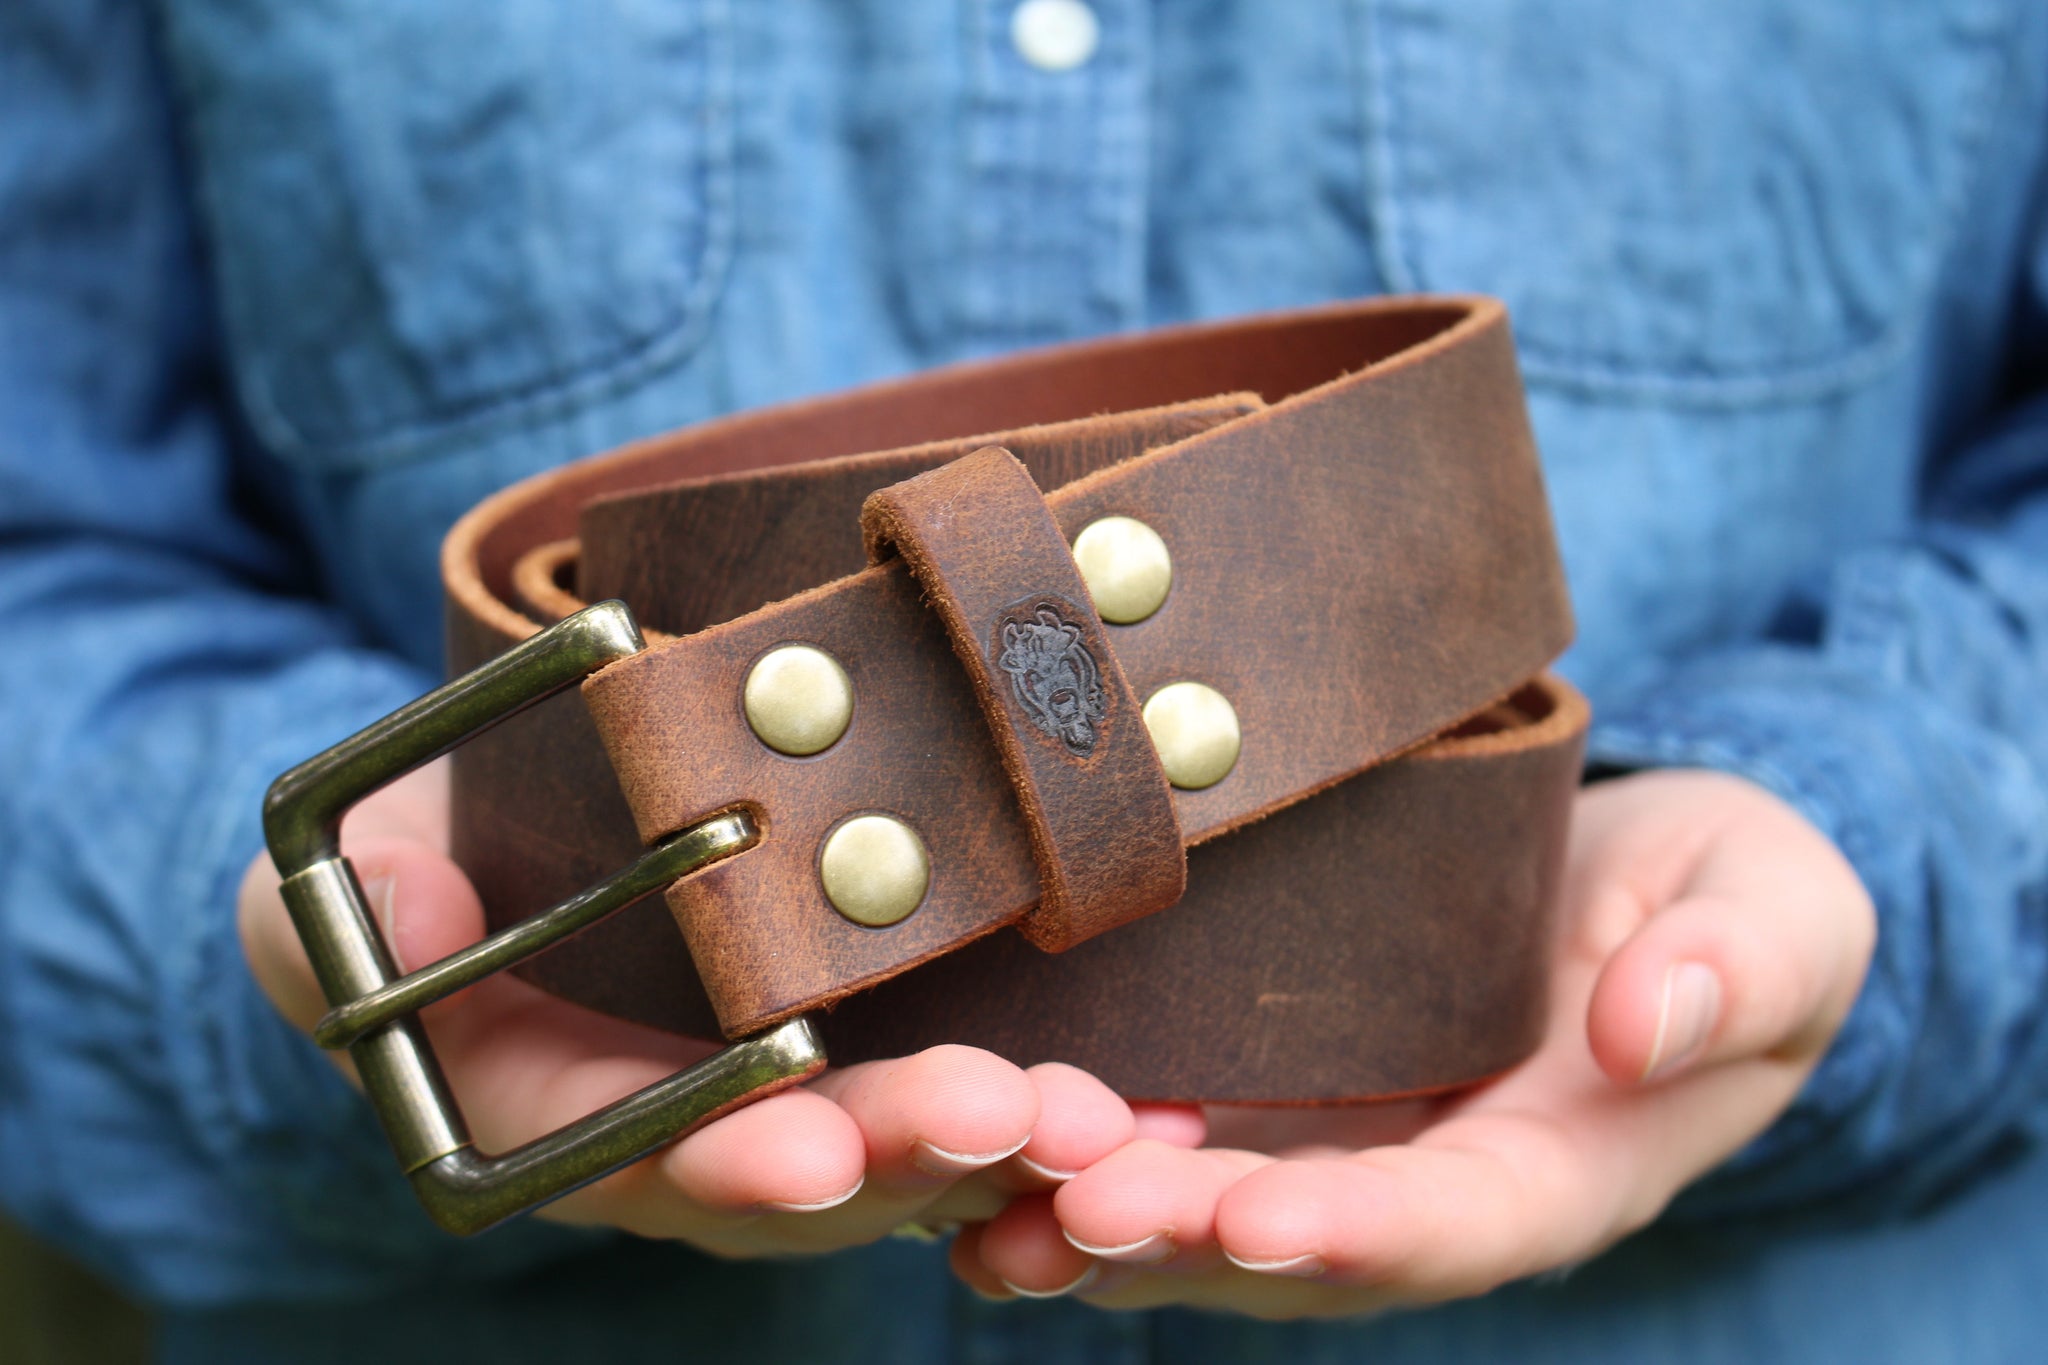 Buffalo Leather Belts - Handmade Leather Belts